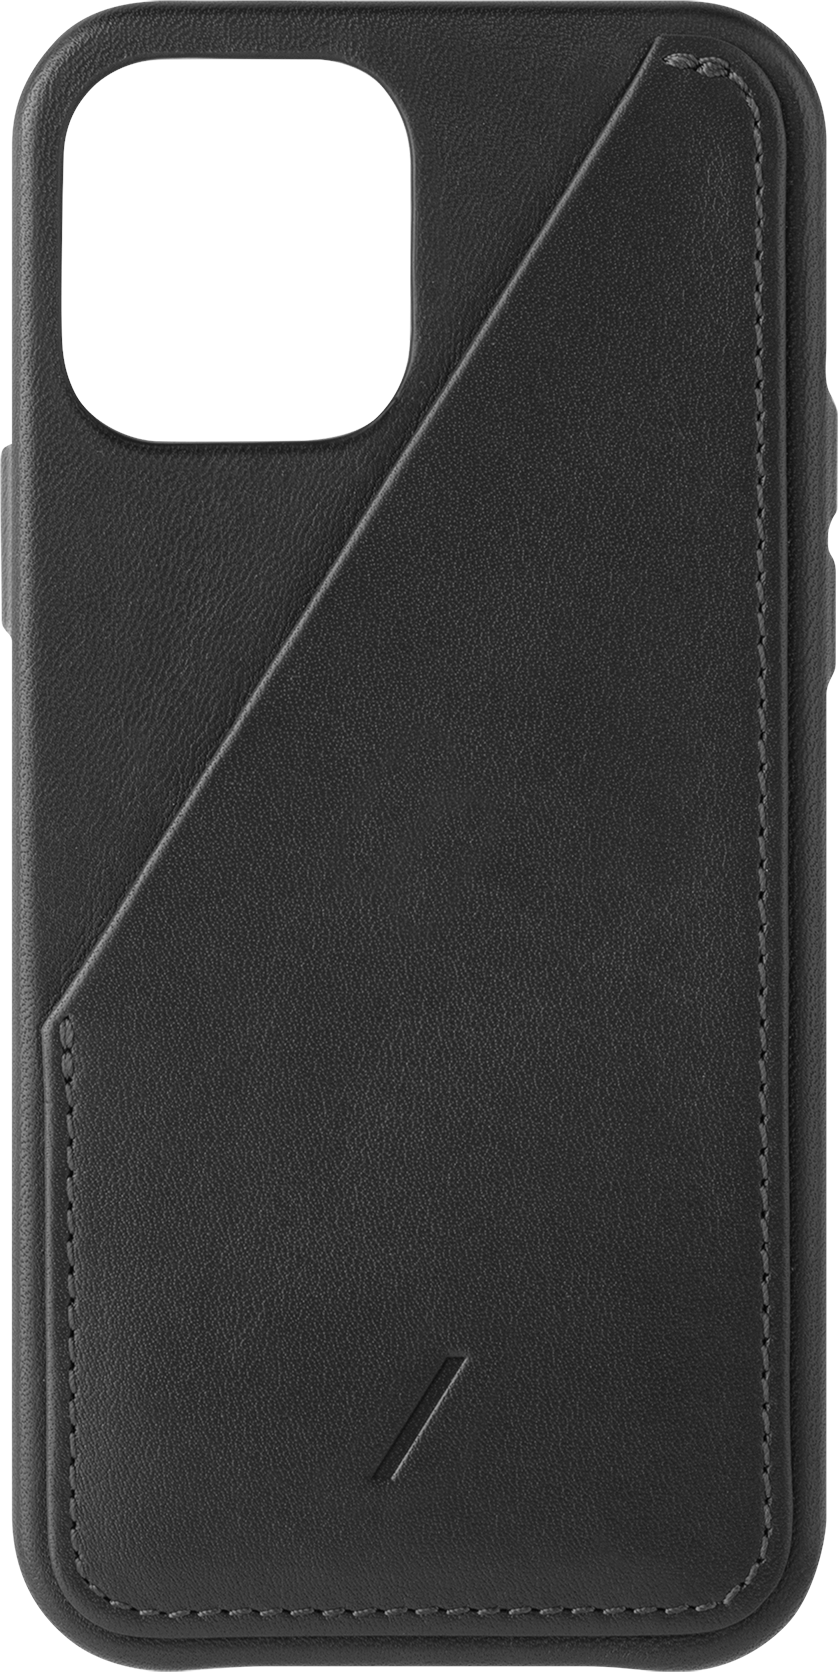 Чехол Native Union iPhone 7 CLIC CARD (CCARD-BLK-BLK-7) черный